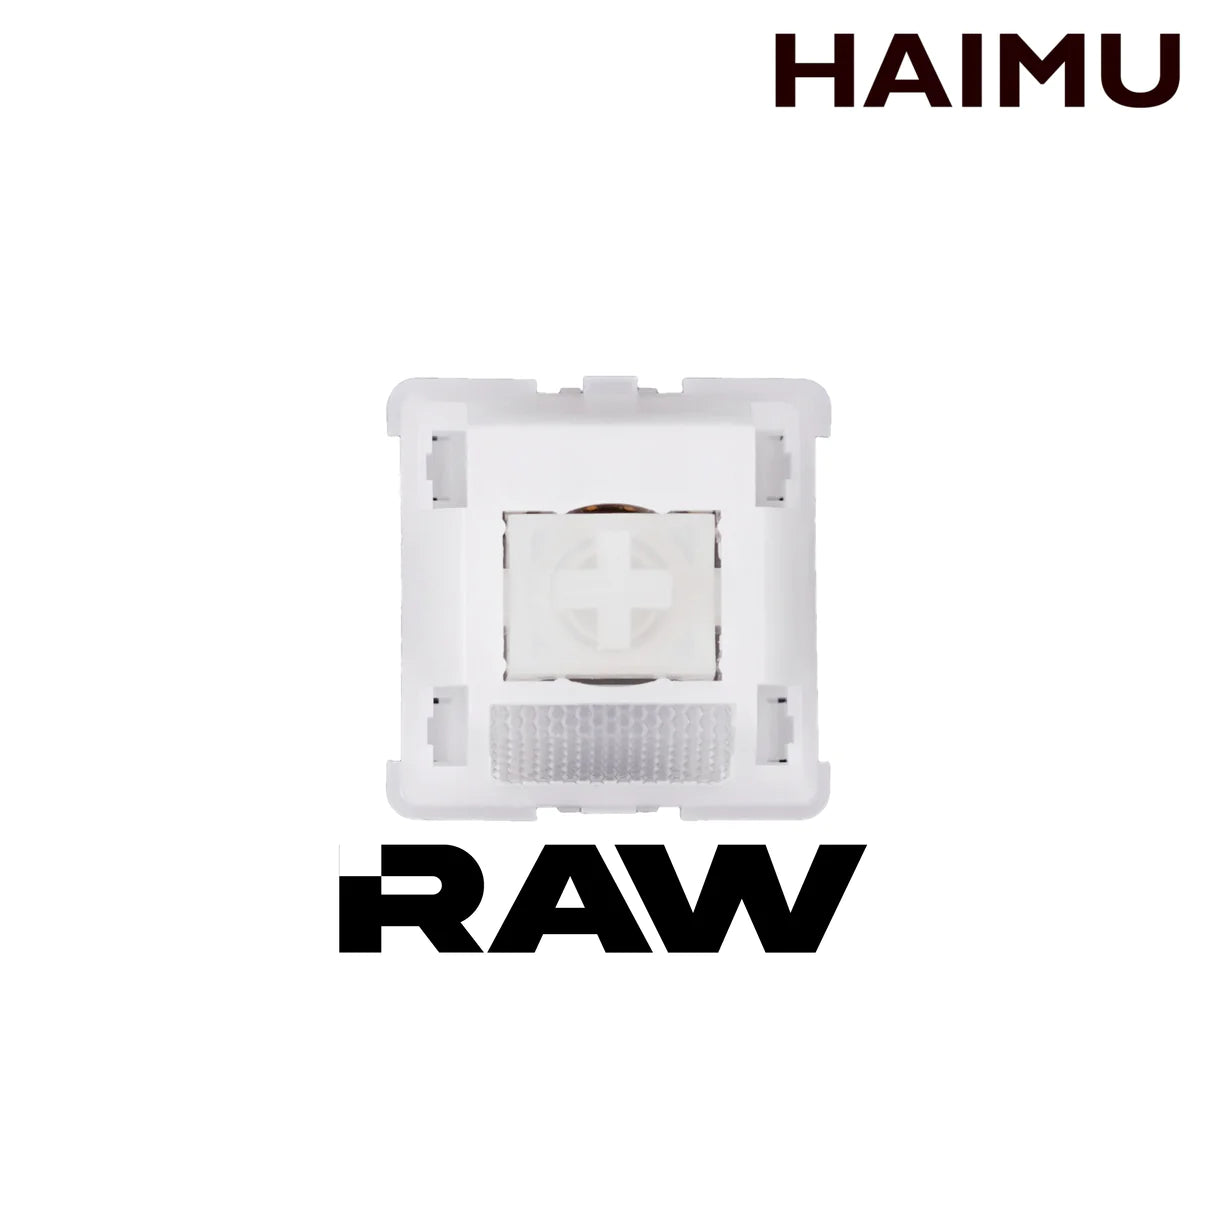 Haimu Raw Linear Switches